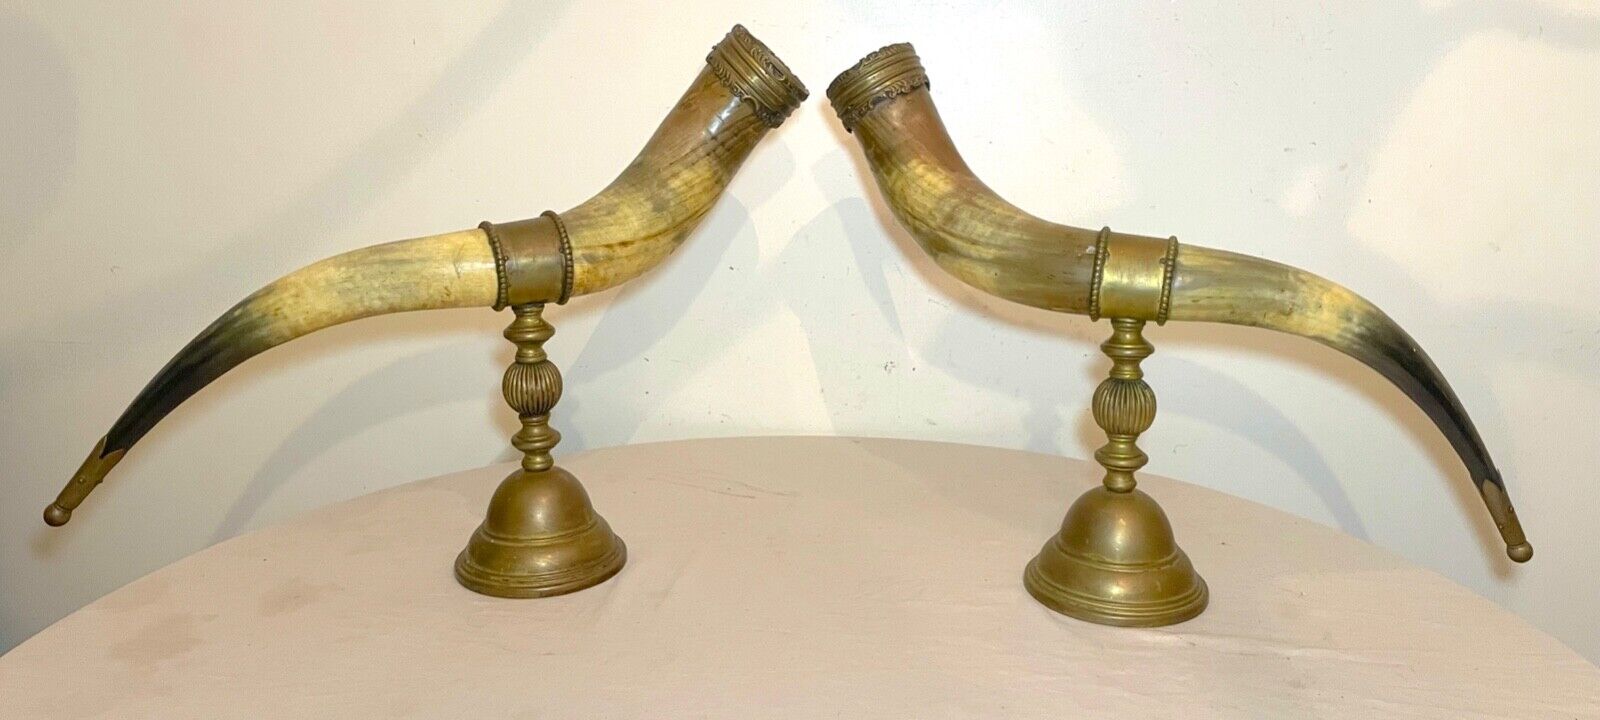 HUGE pair of antique bronze mounted read horn cornucopia decor statues garniture